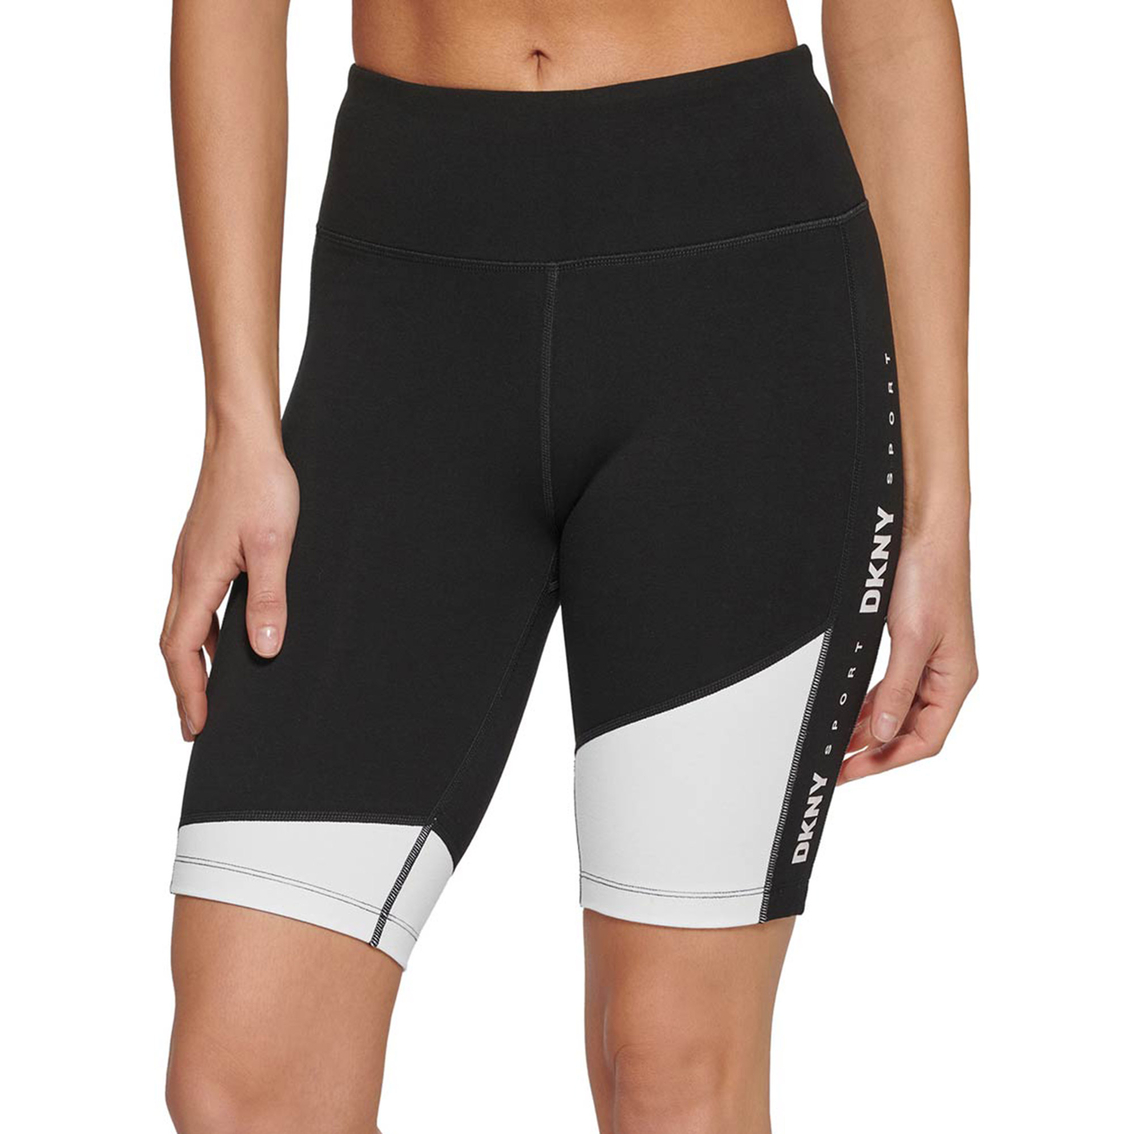 Dkny Sport High Waist Logo Colorblock Bike Shorts | Shorts | Clothing ...